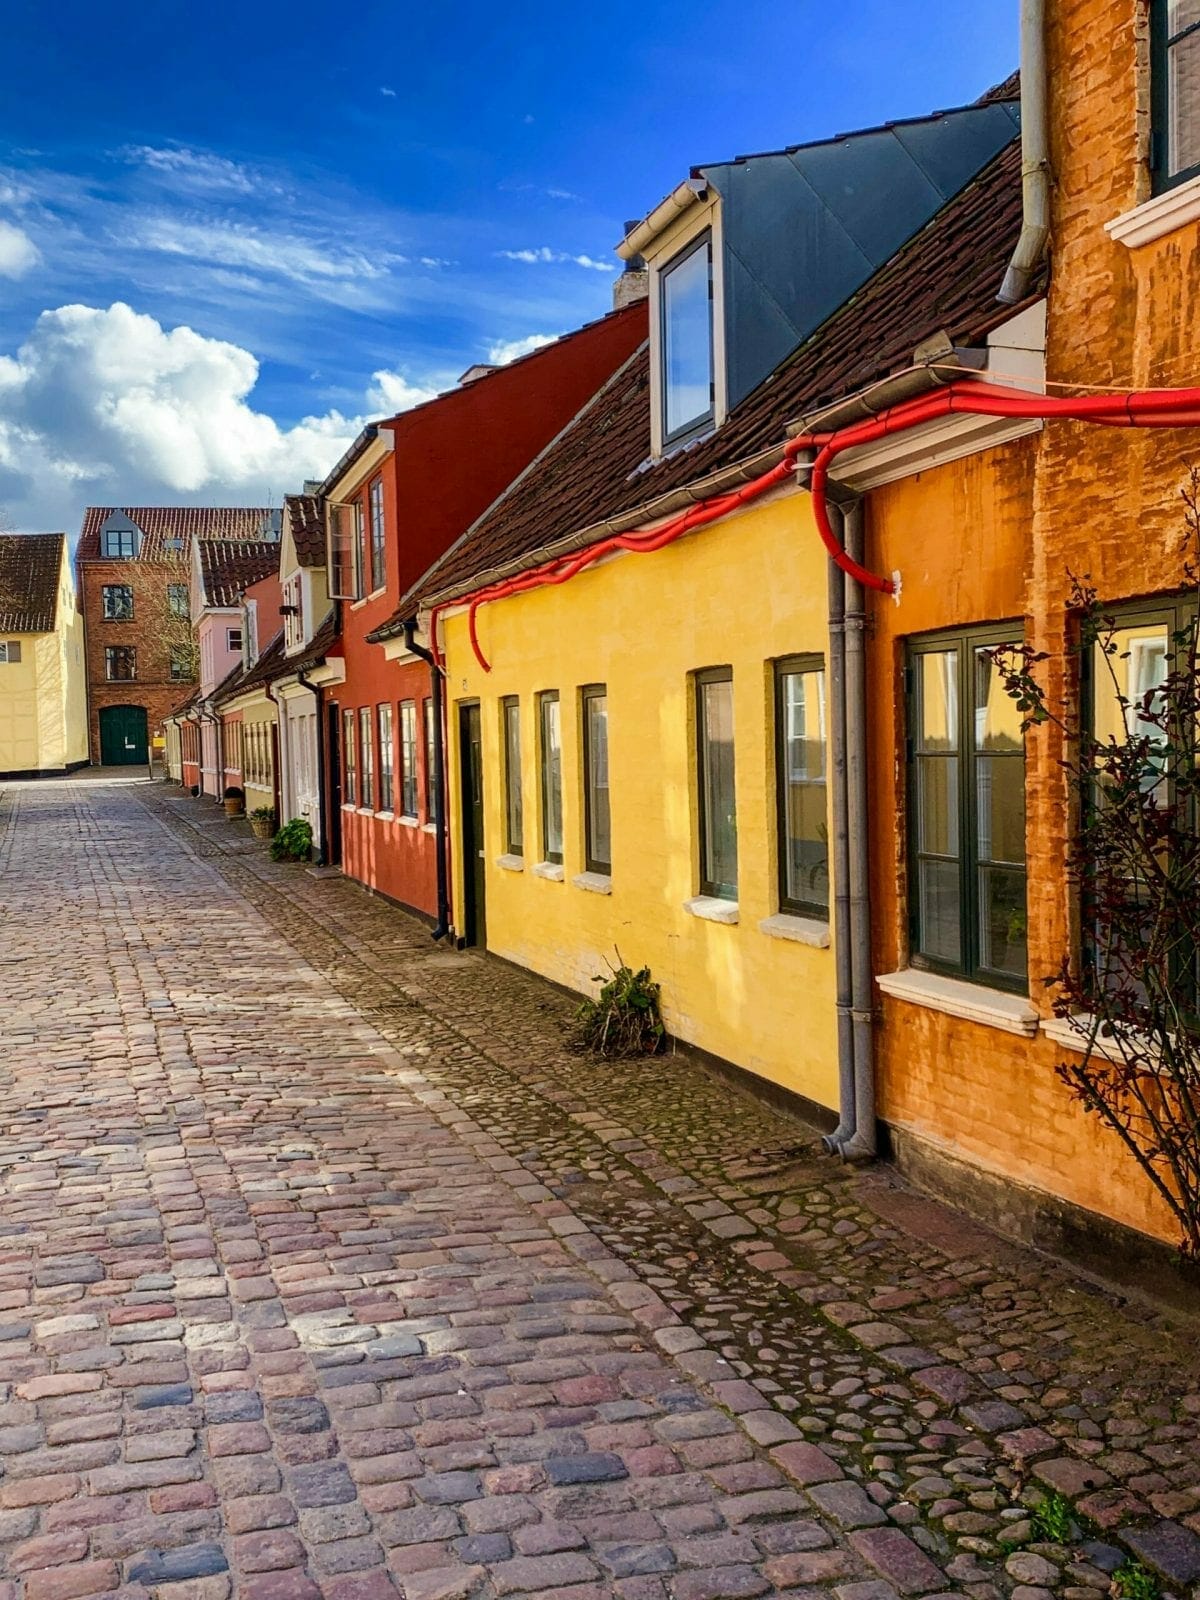 Odense, Denmark FAQ's